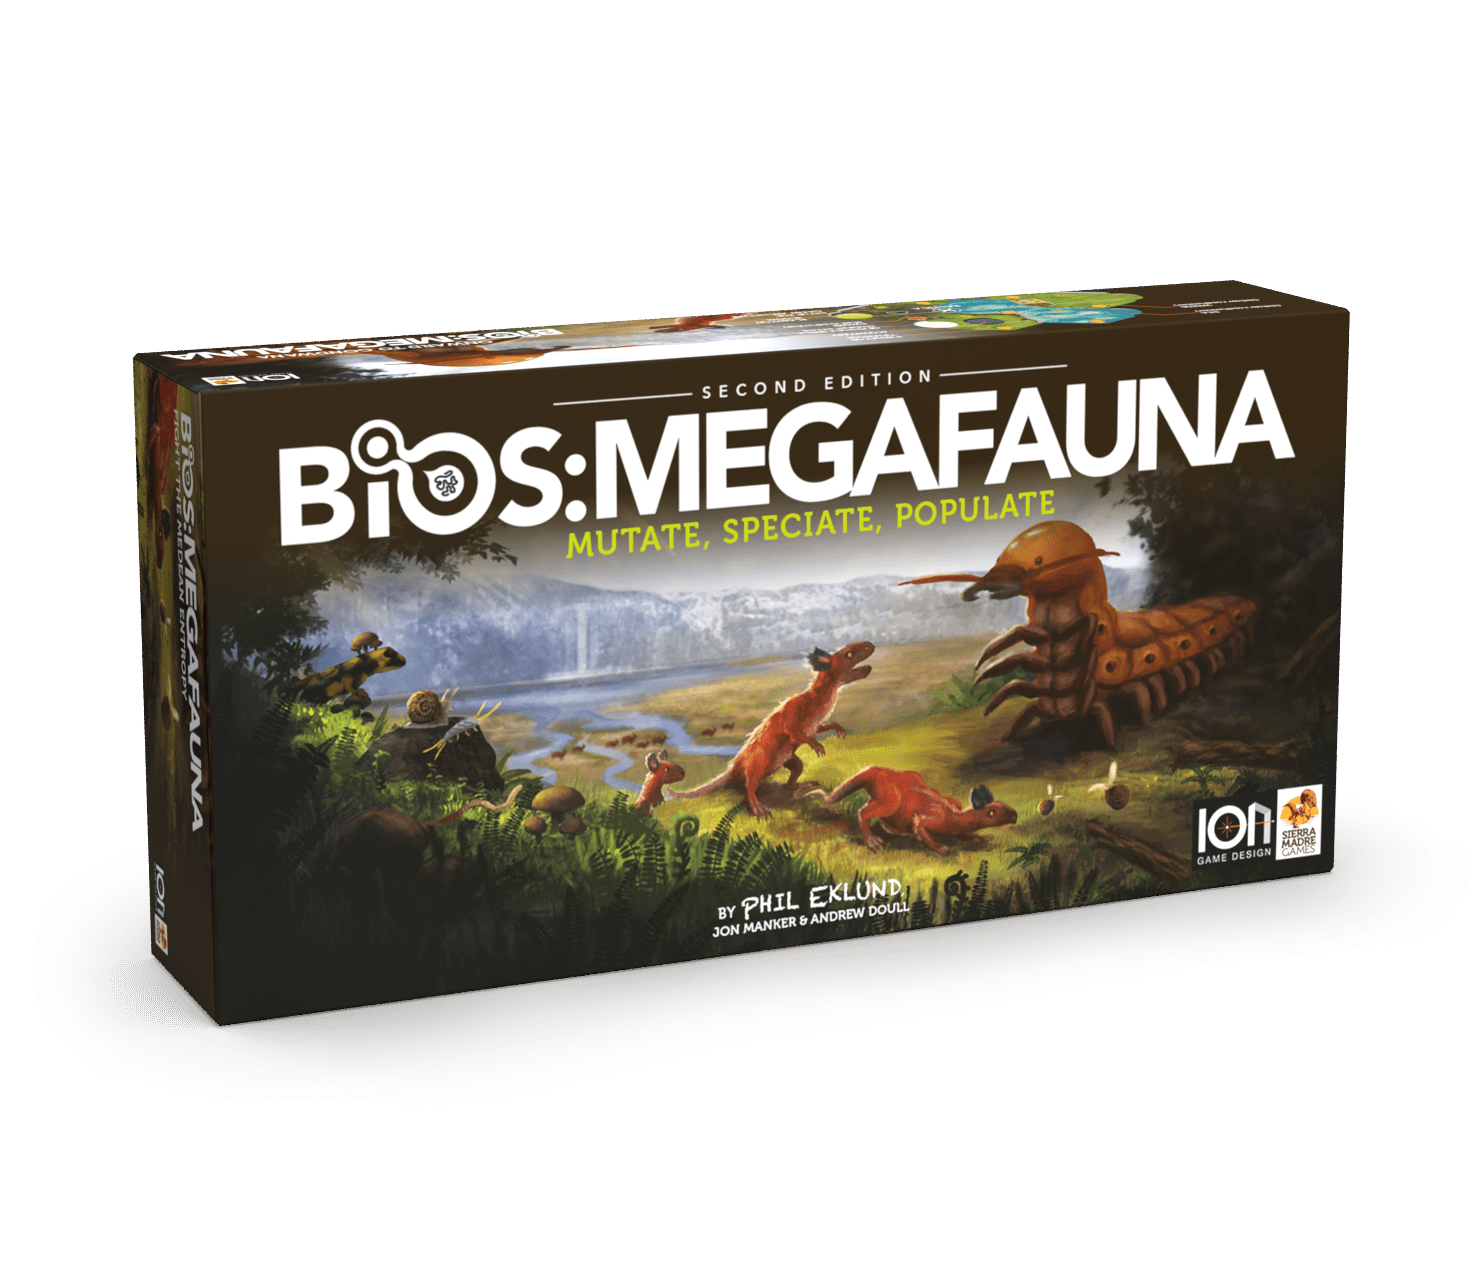 Bios: Megafauna (2nd edition board game) - 3D Box Cover